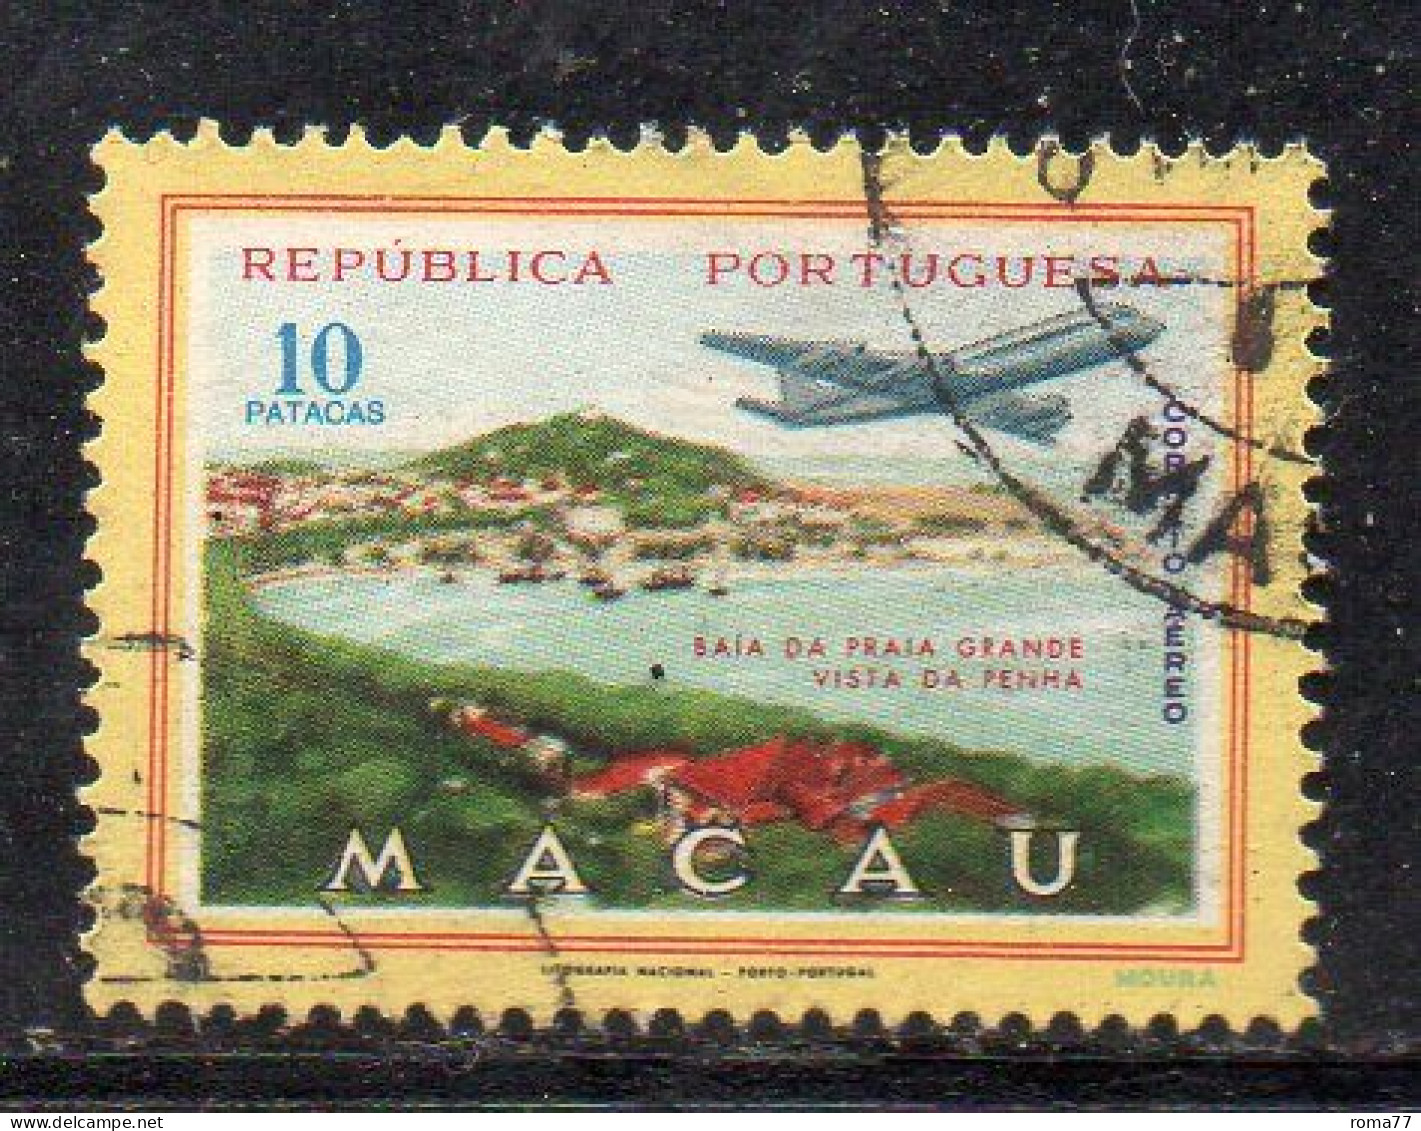 MONK306 - MACAU MACAO , Posta Aerea Il 10 Patacas Usato - Luftpost